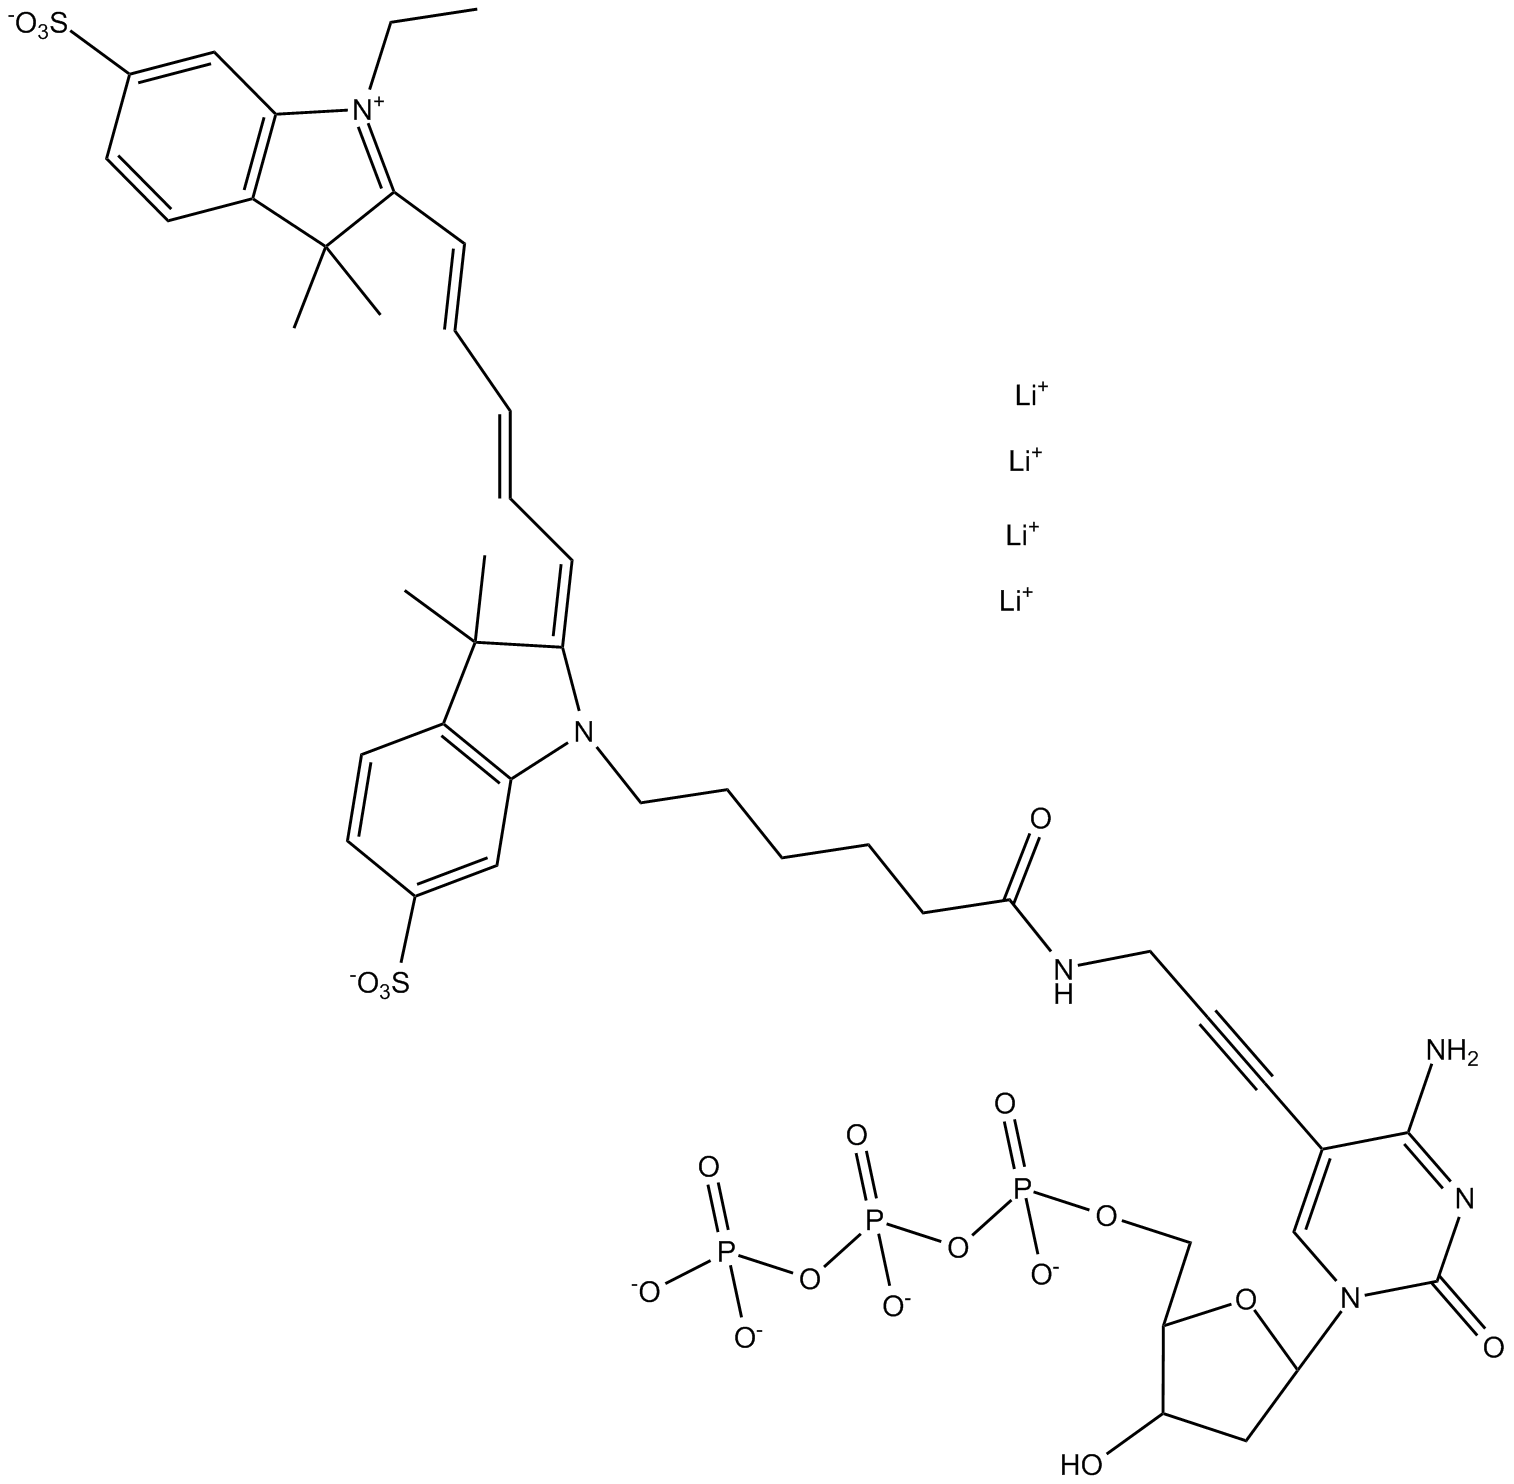 Cyanine 5-dCTP